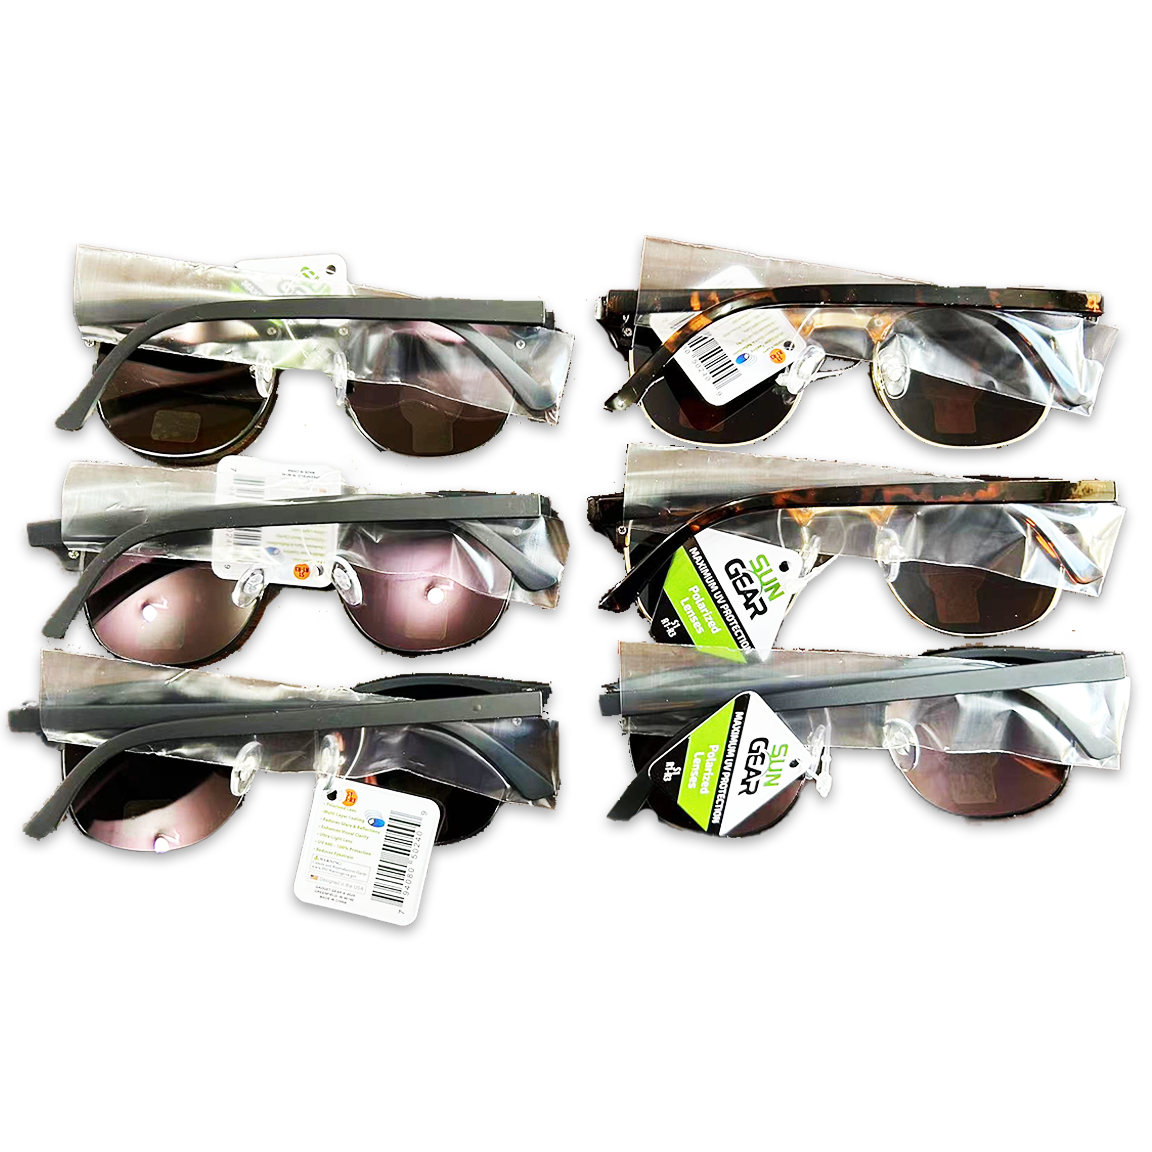 Sunglasses SunGear Assortment- 6 Pieces Per Pack 50240